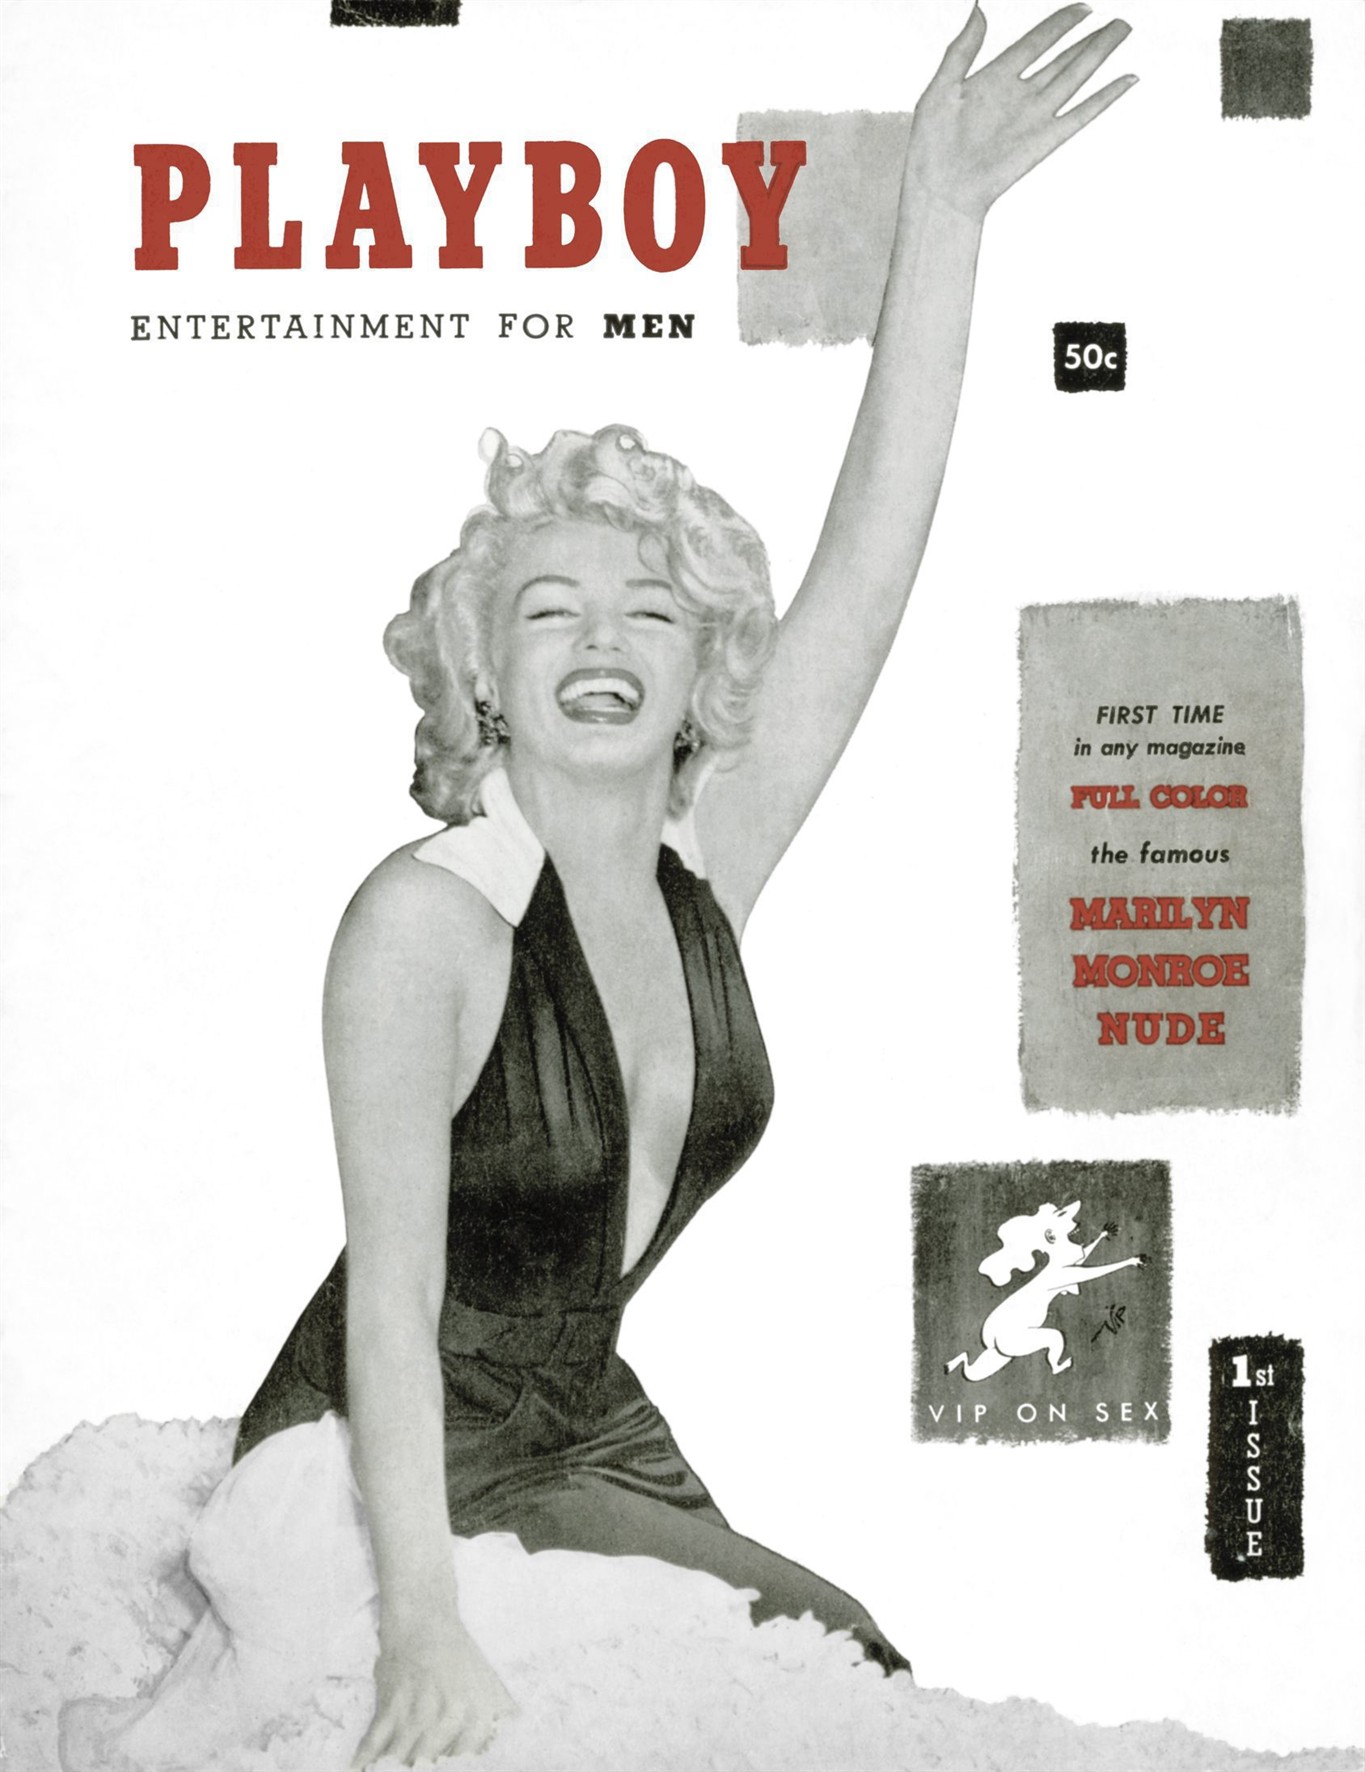 Playboy to stop publishing nude photos - Oneindia News